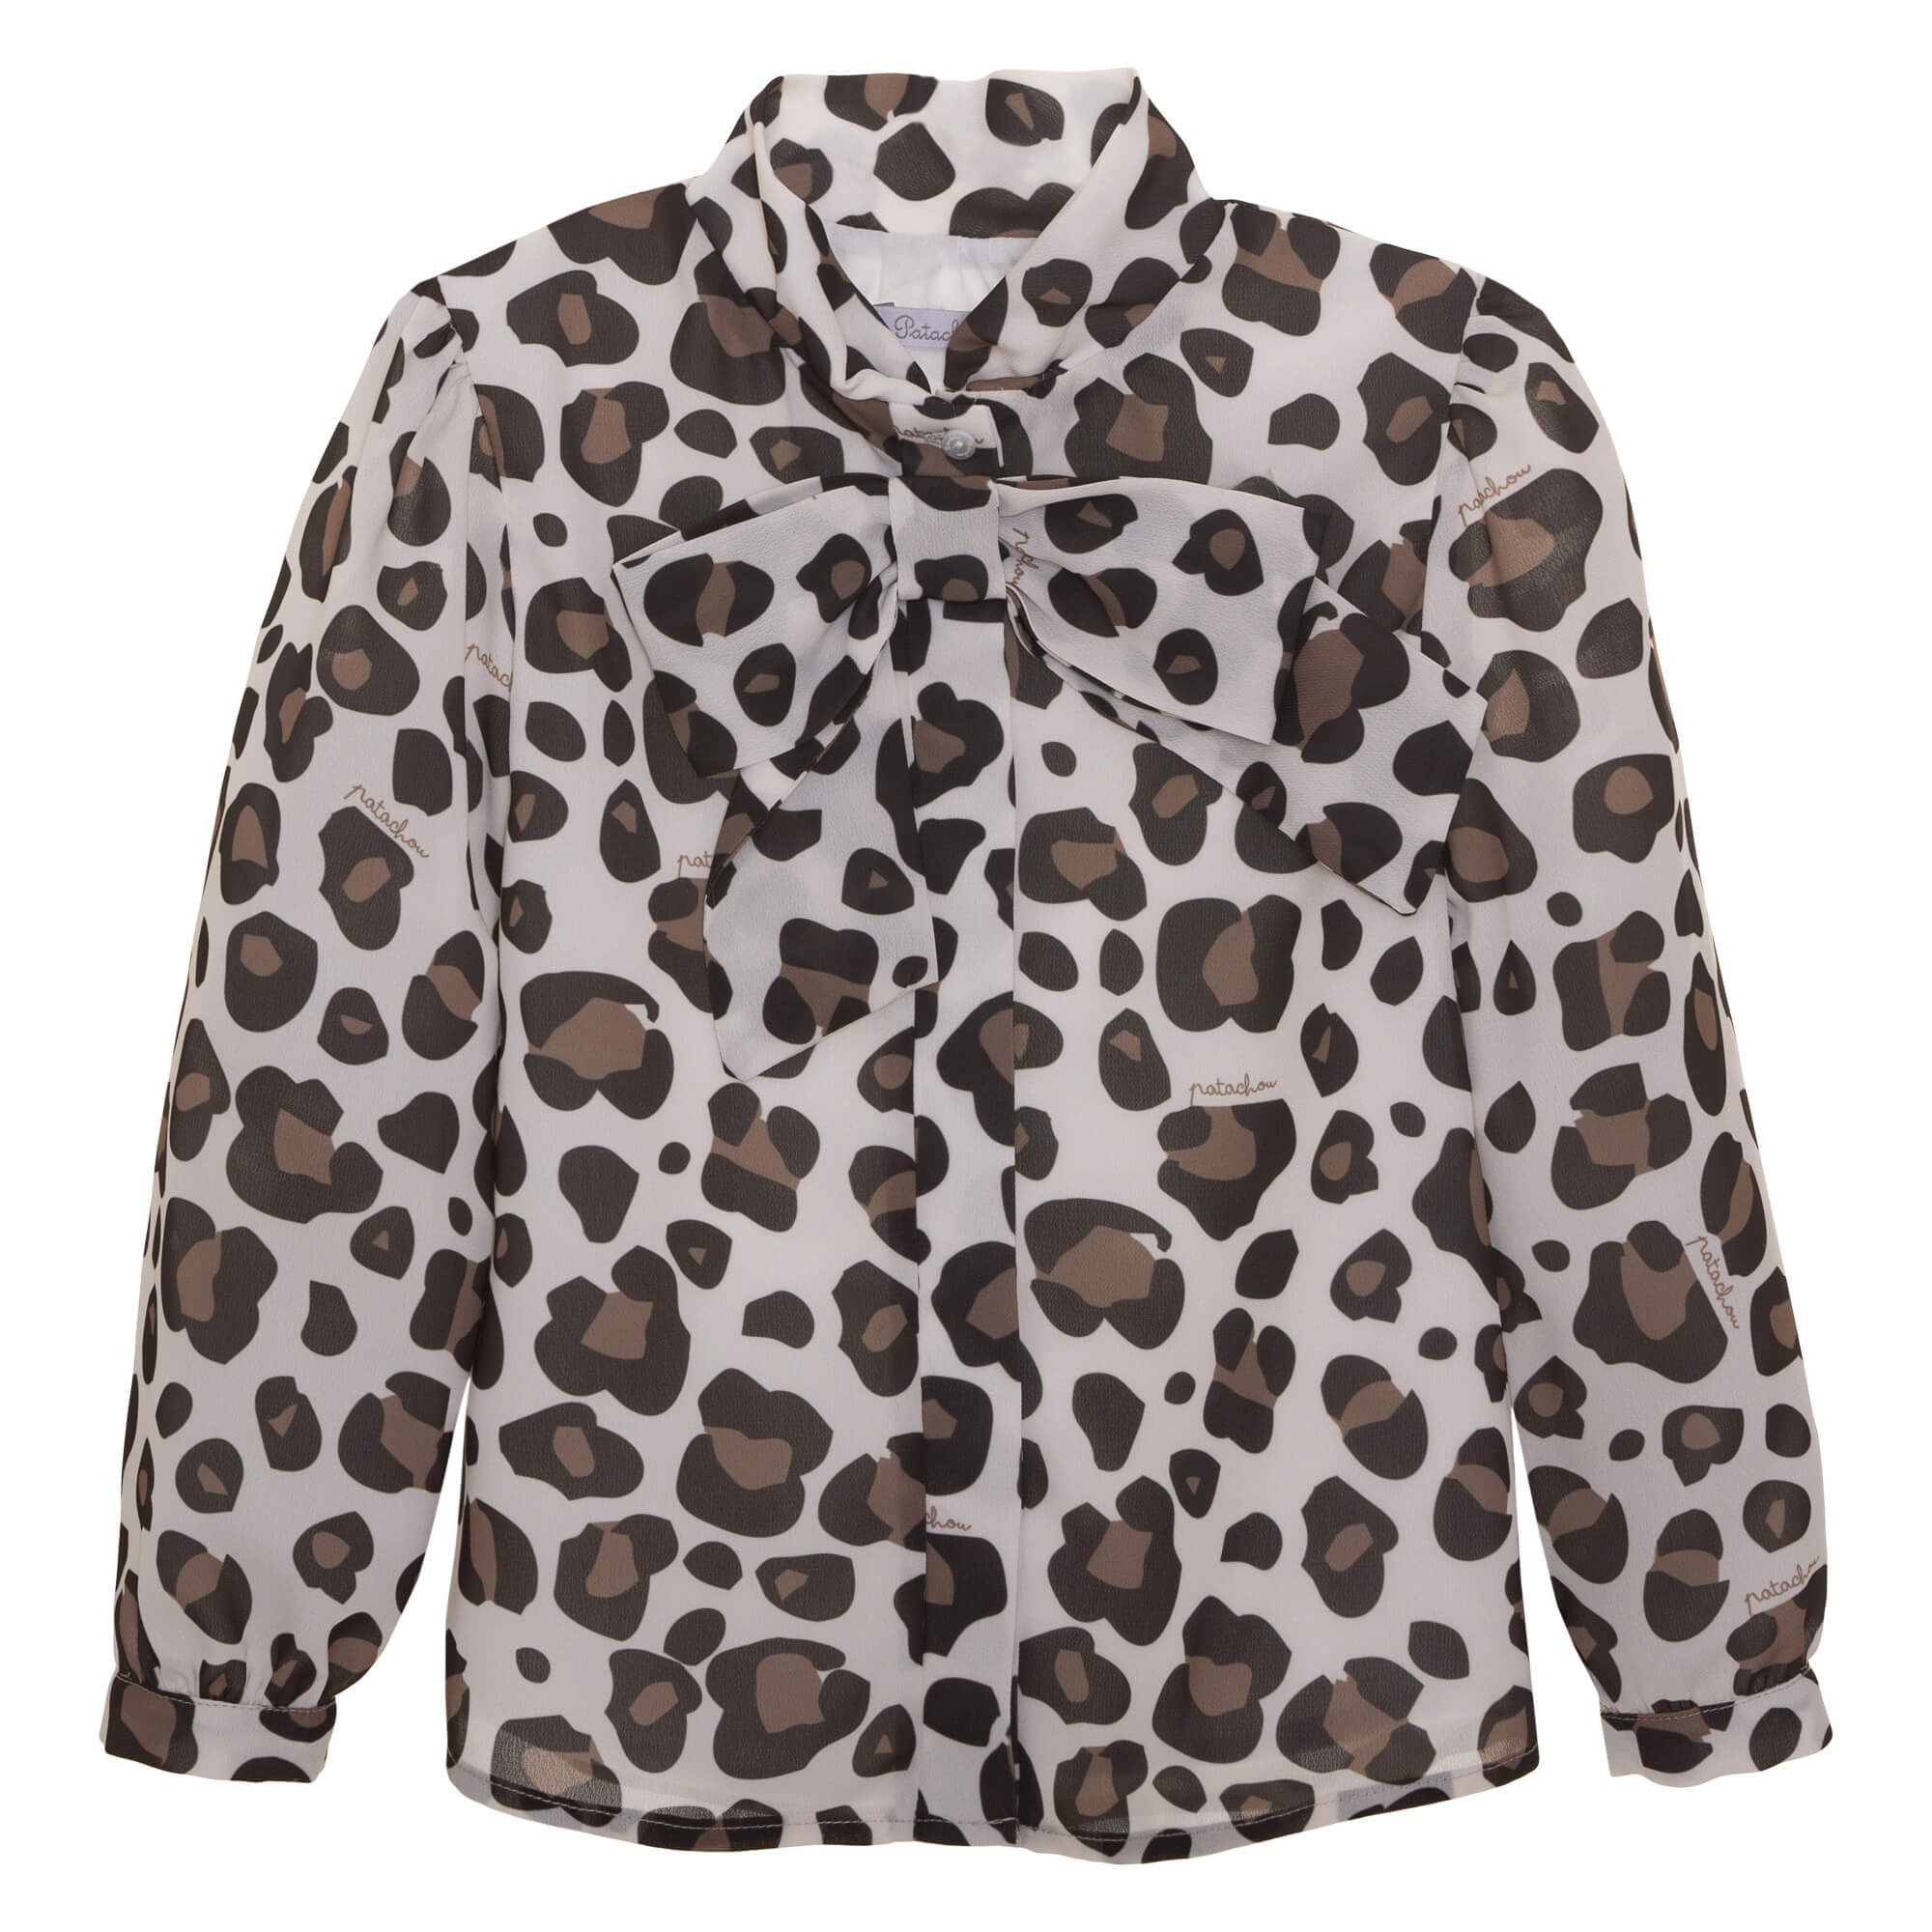 patachou leopard print chiffon girls blouse